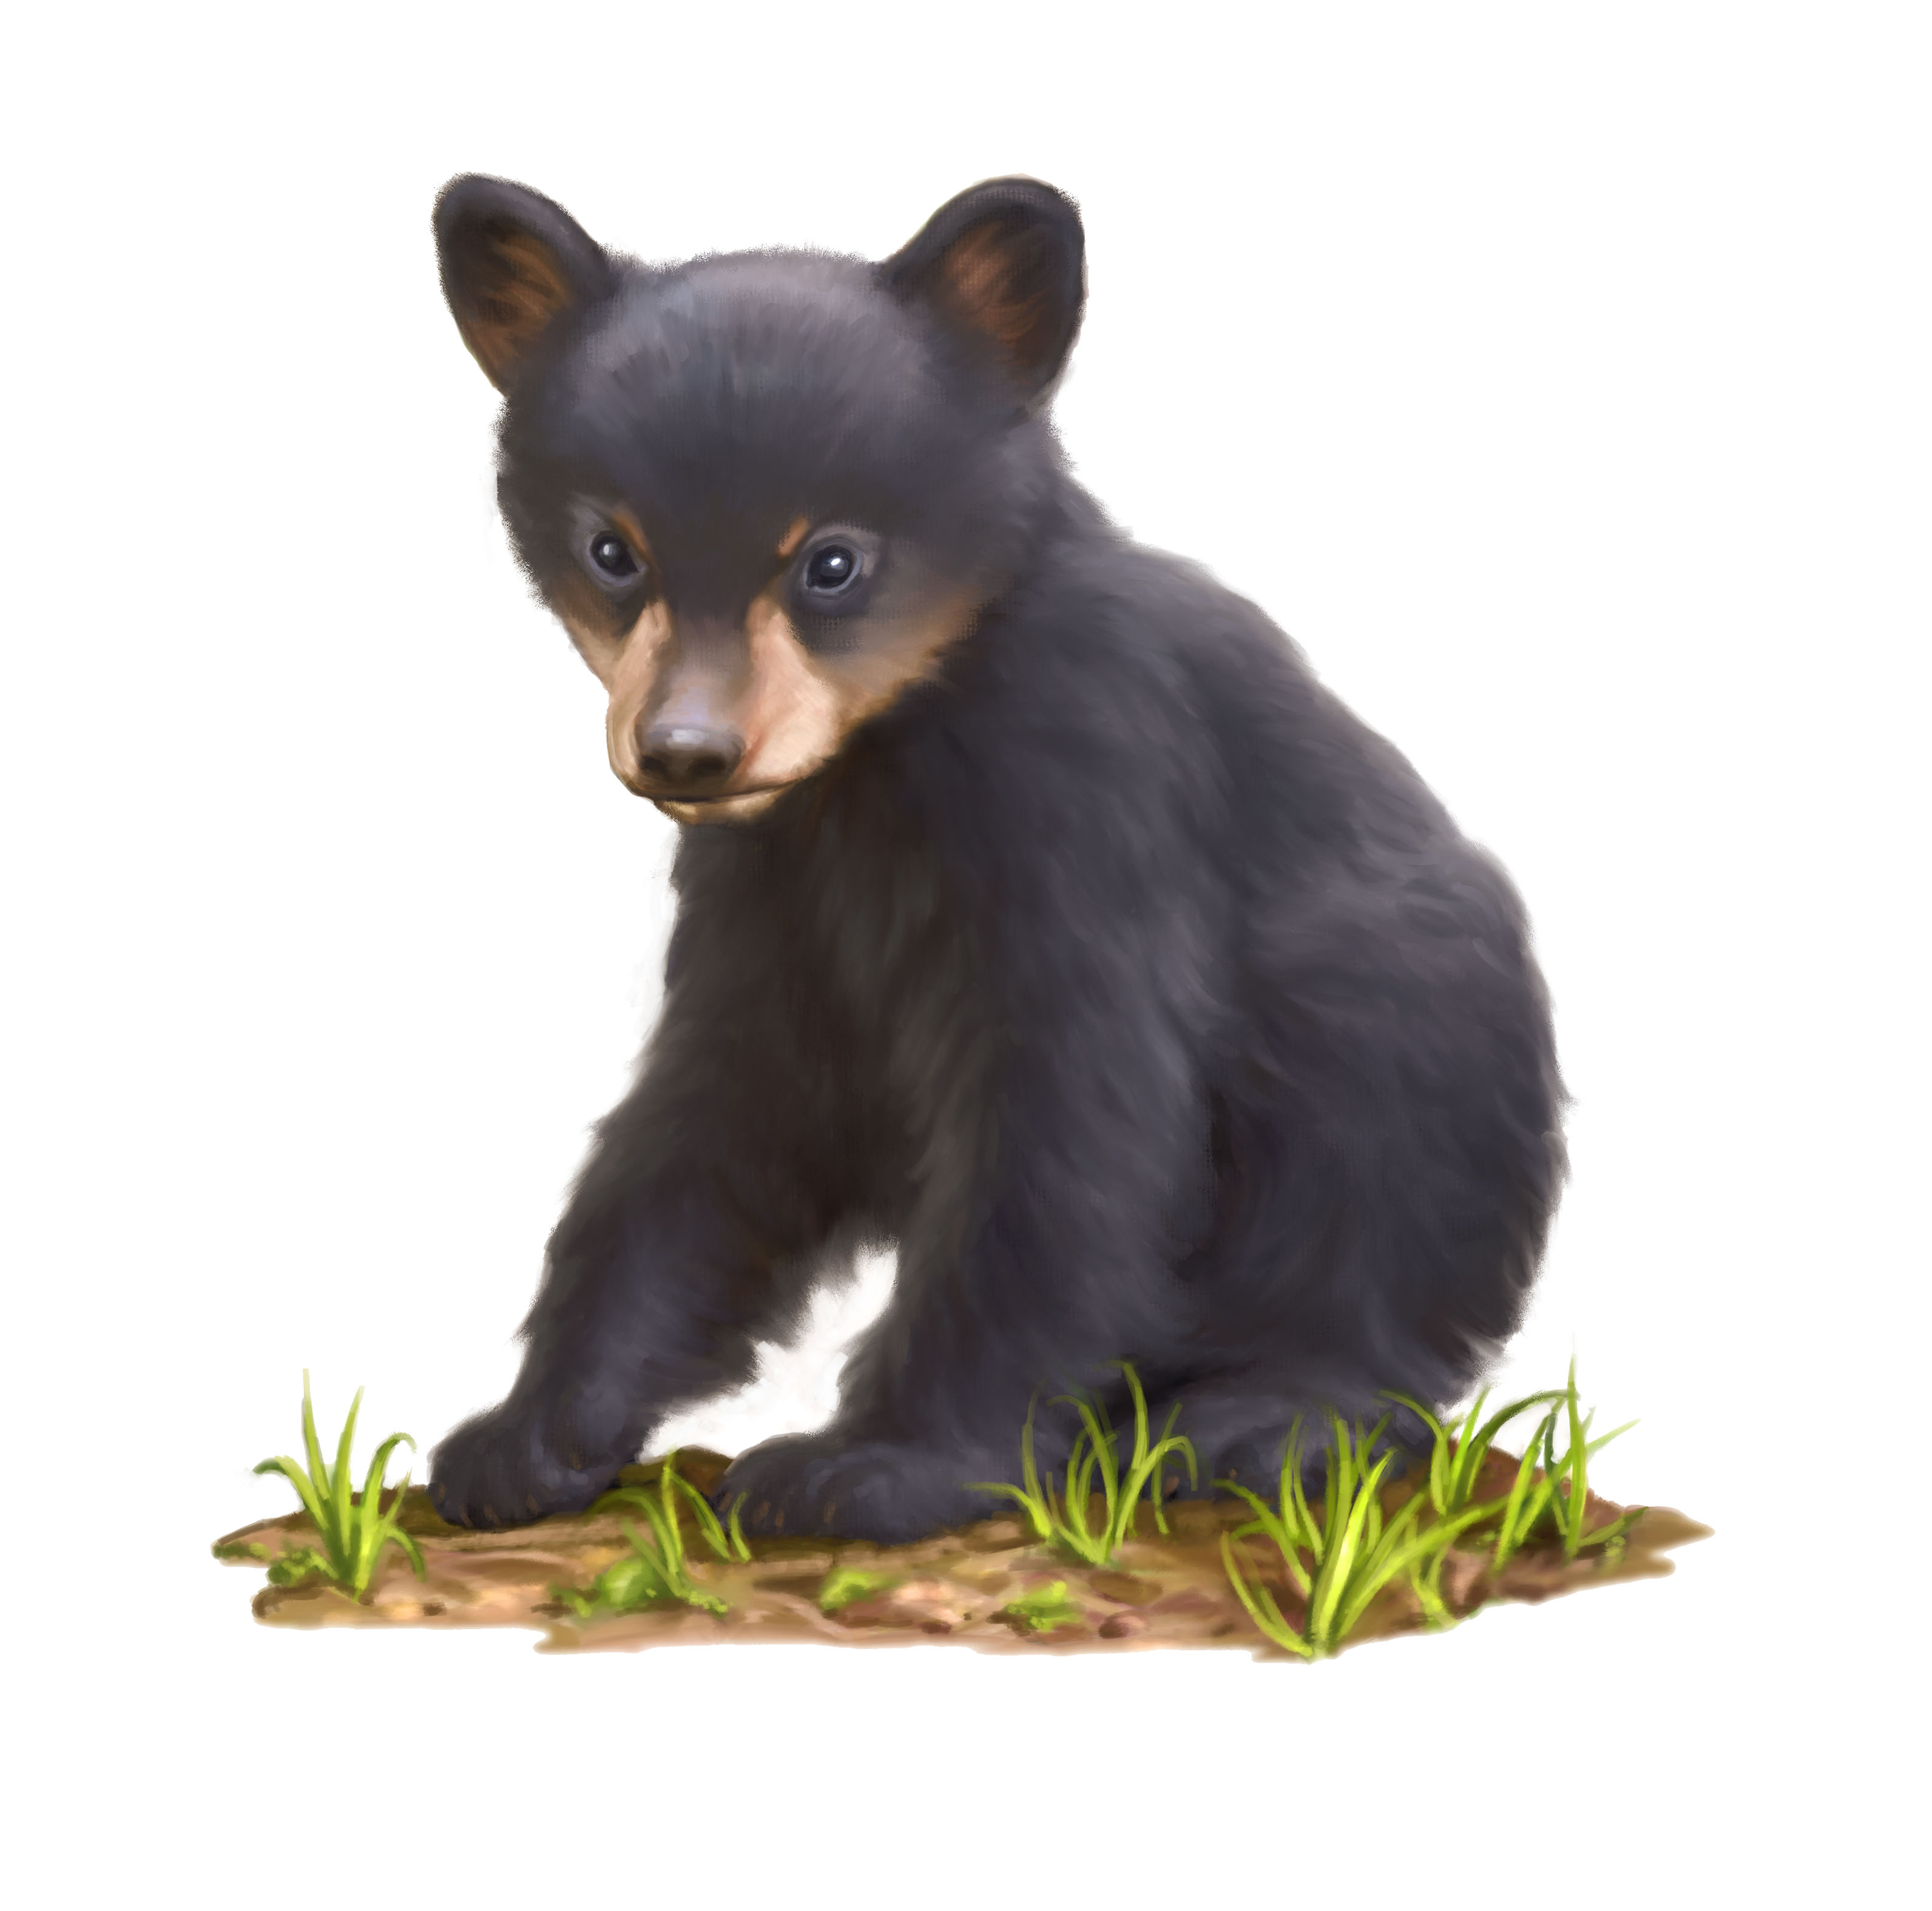 Free Bear Cub Cliparts, Download Free Bear Cub Cliparts png images